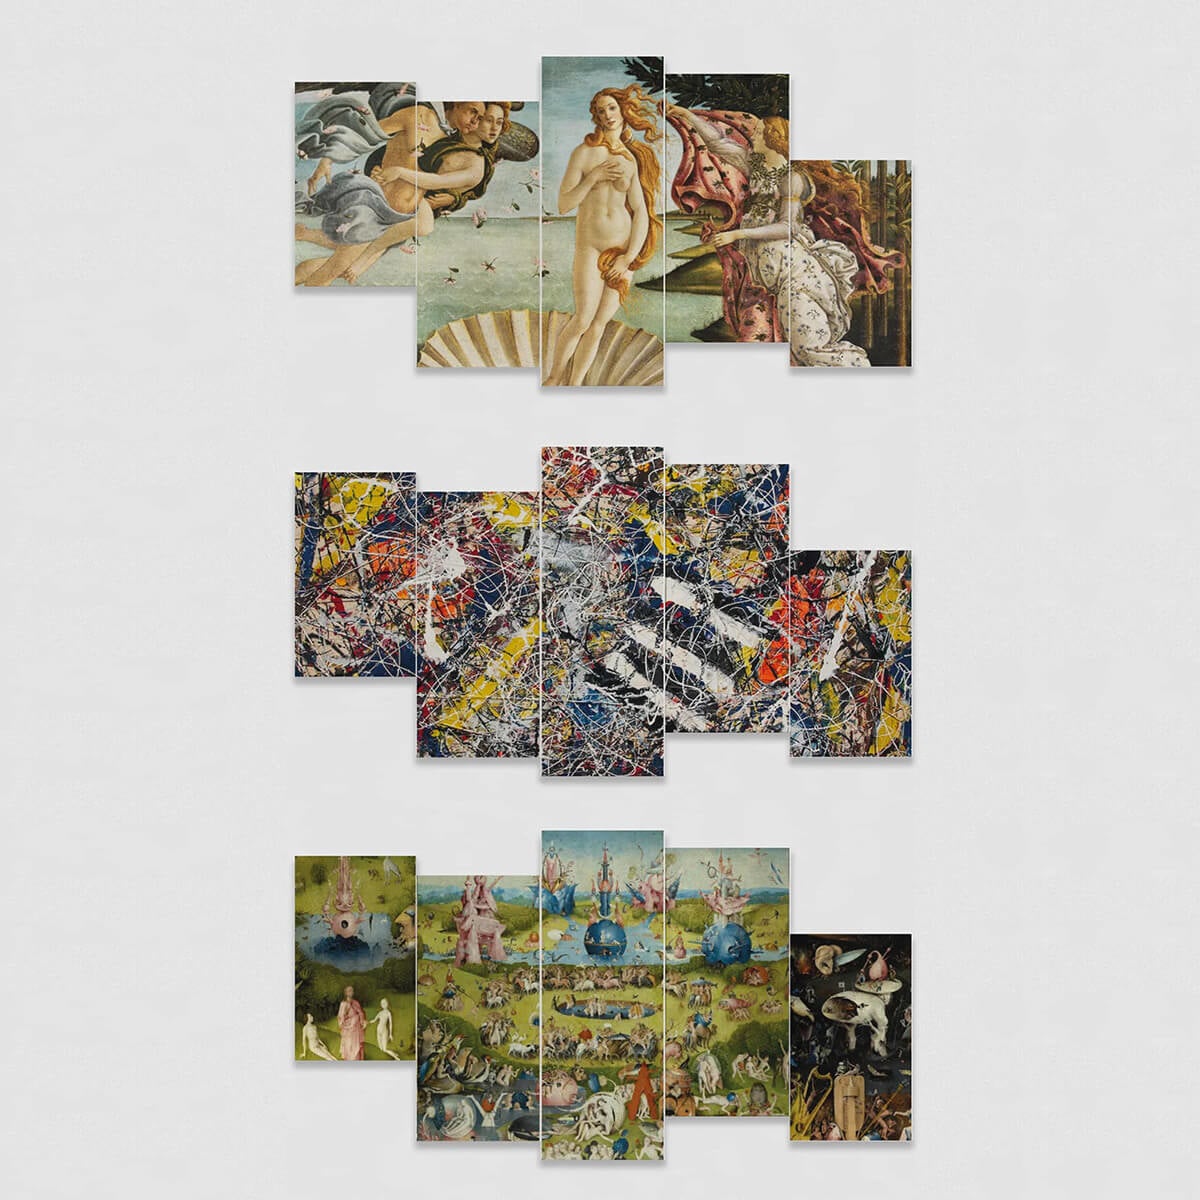 Henri Rousseau’s The Dream Framed Murals